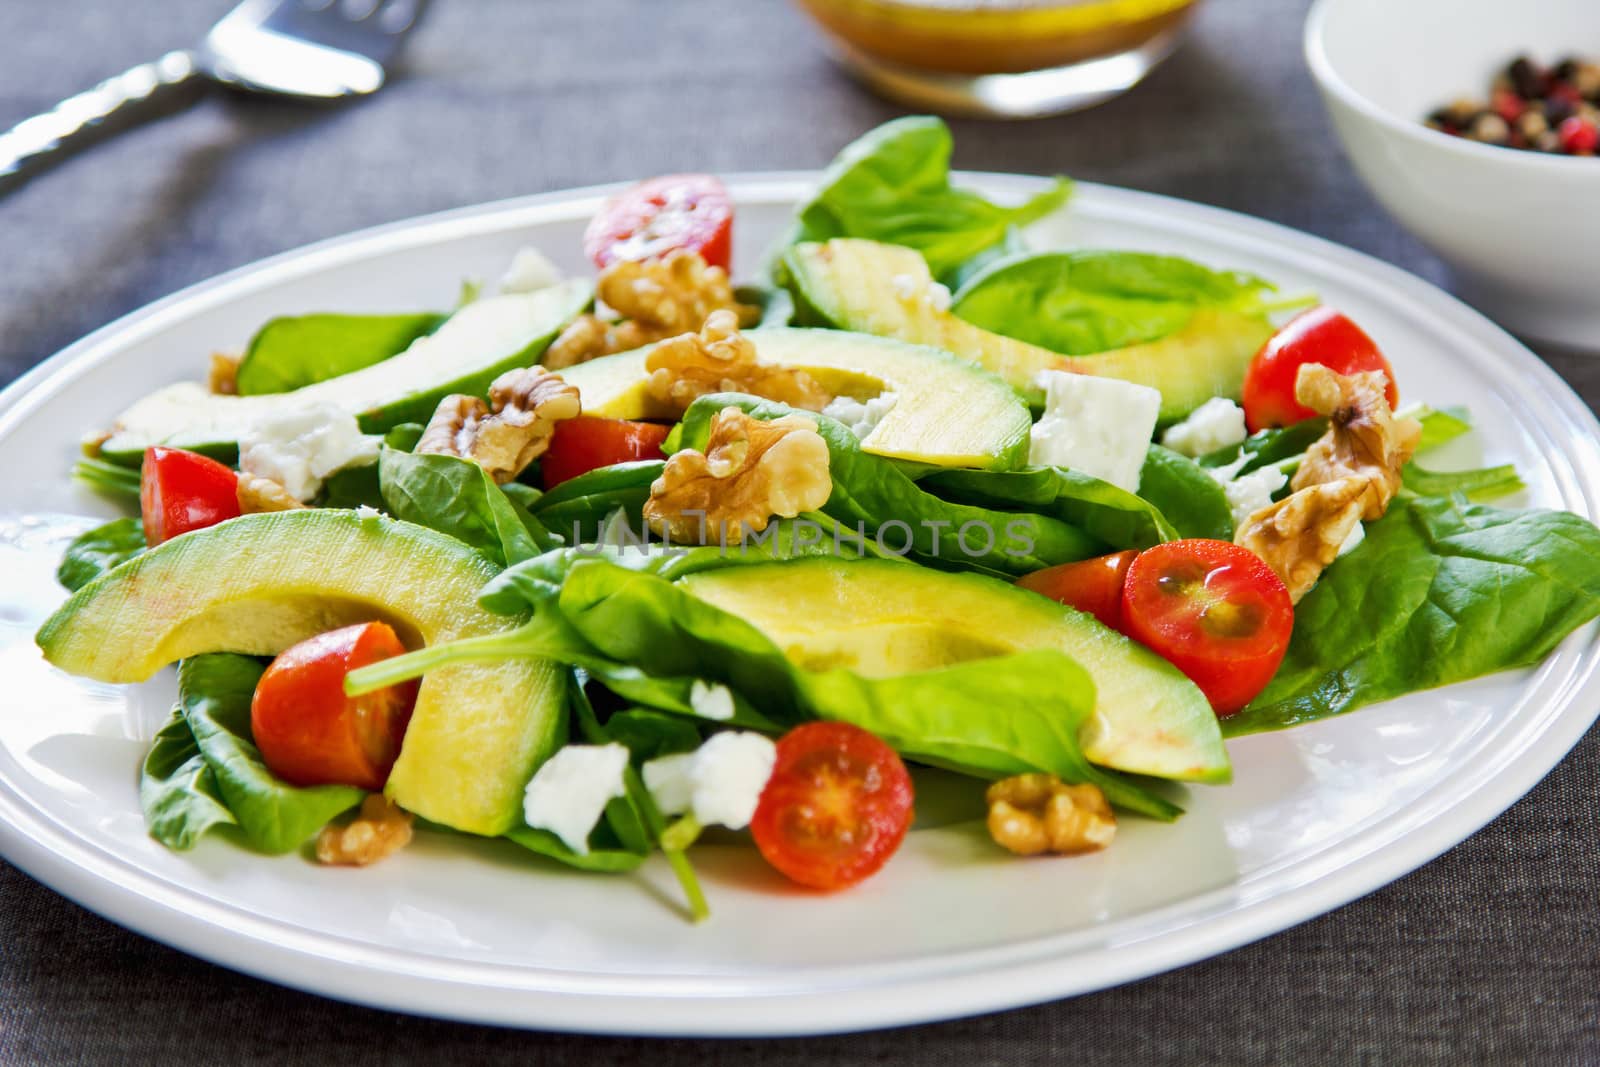 Avocado with Spinach, Feta and Walnut salad